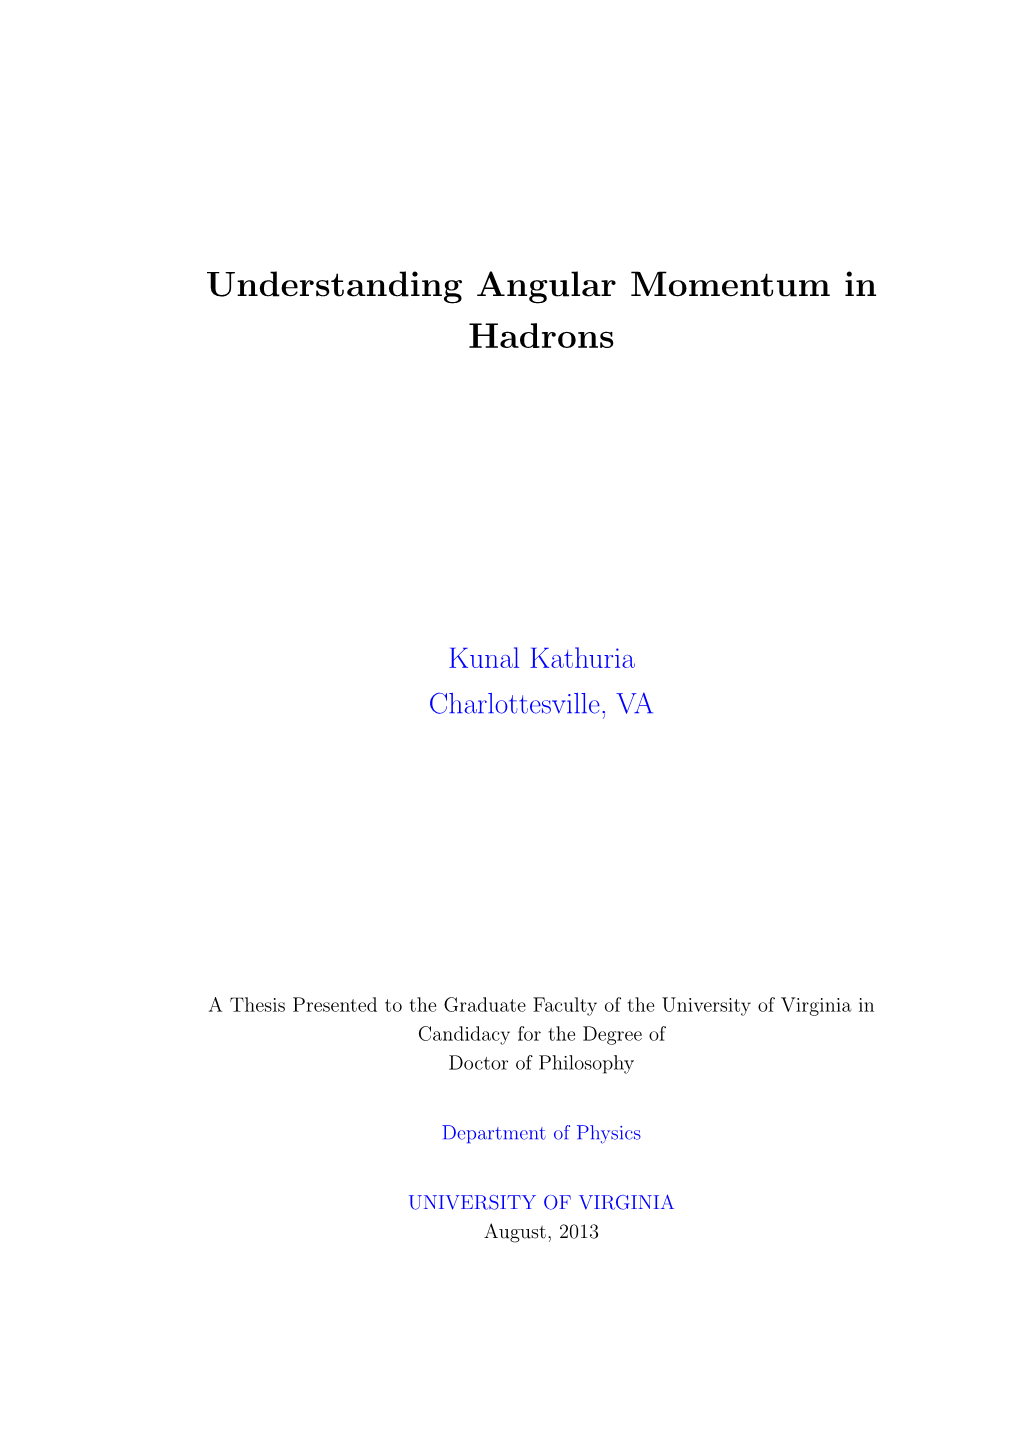 Understanding Angular Momentum in Hadrons